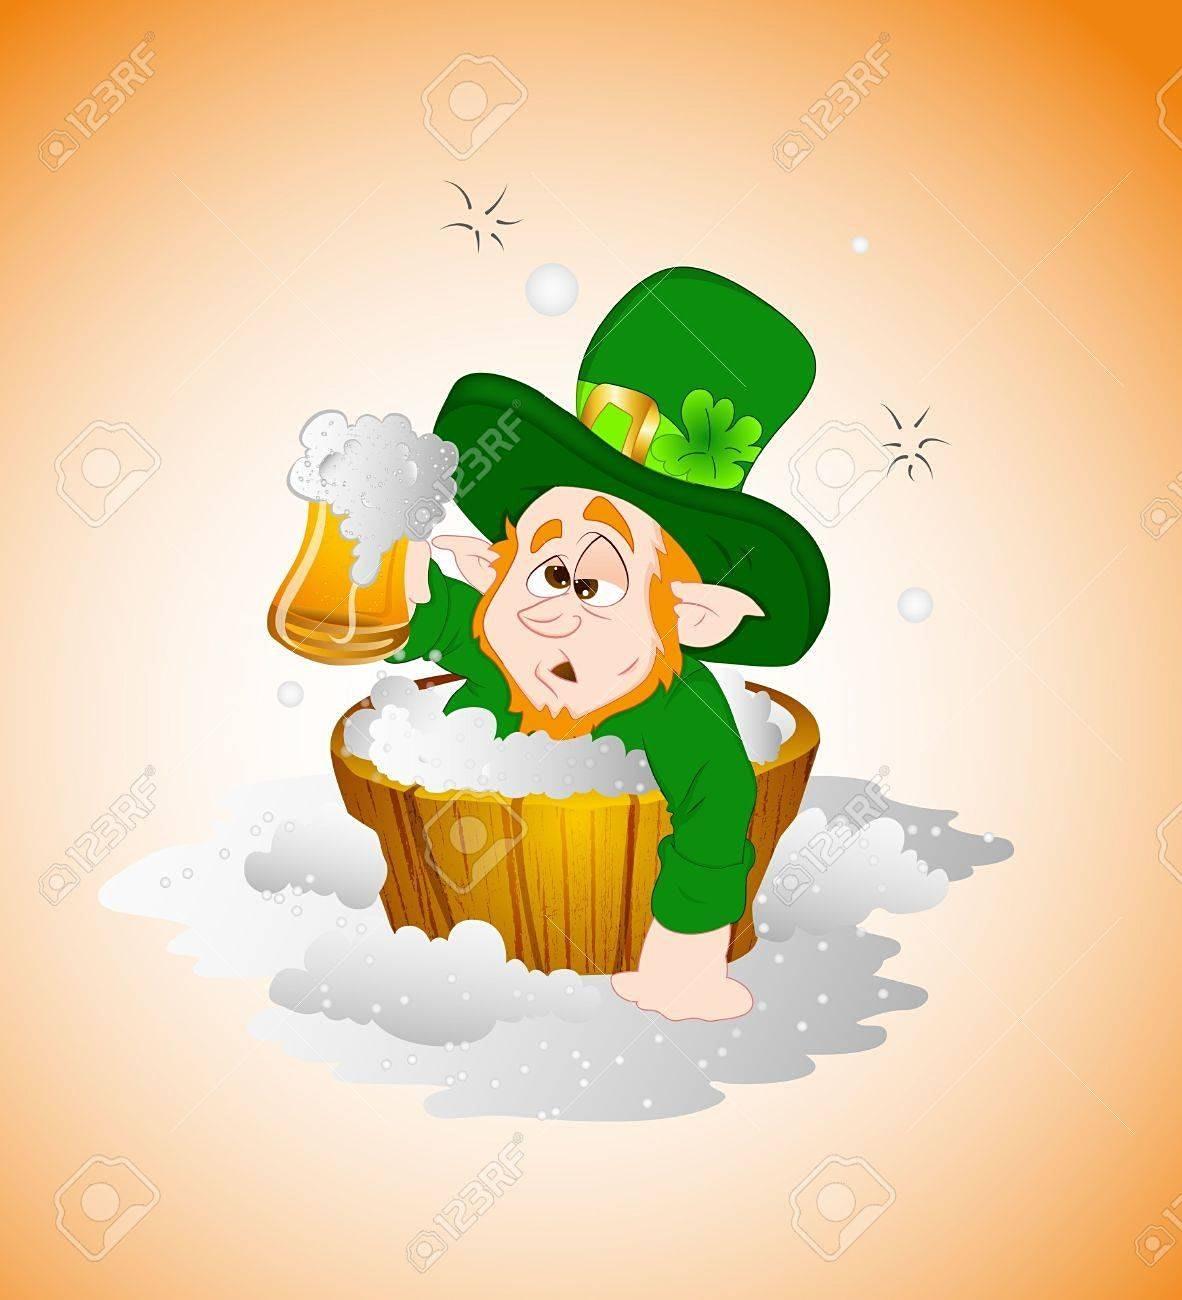 Copy of St. Patrick's Day Drunken Leprechauns Bar Crawl